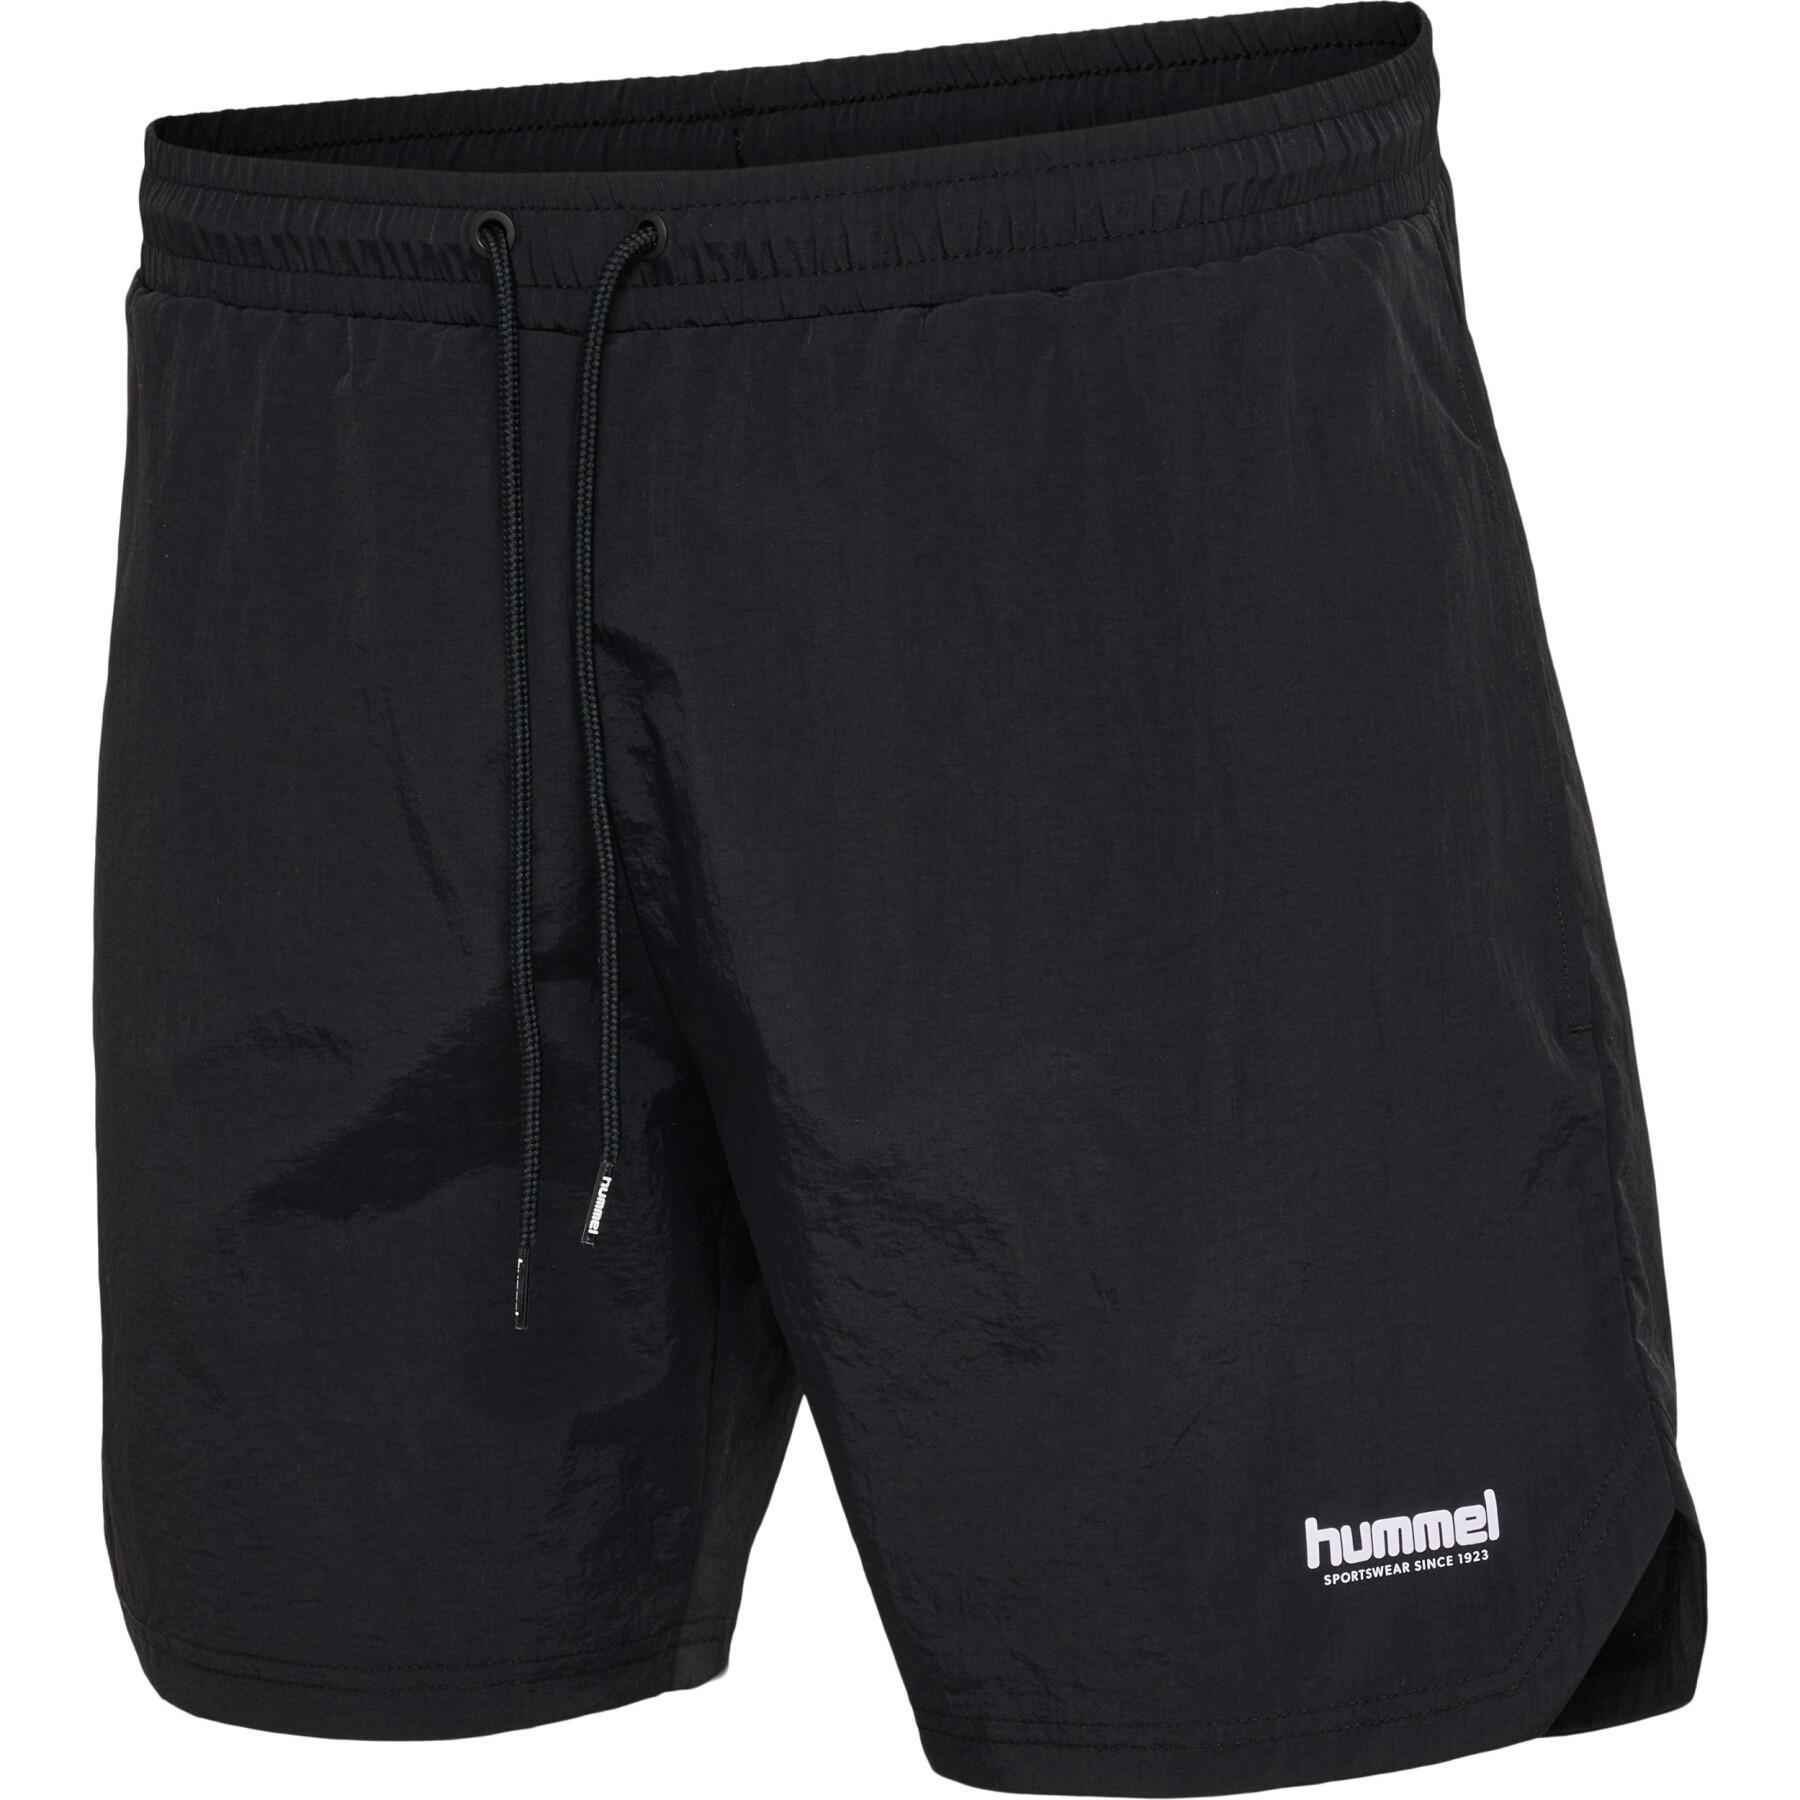 Woven shorts Hummel Legacy Travis